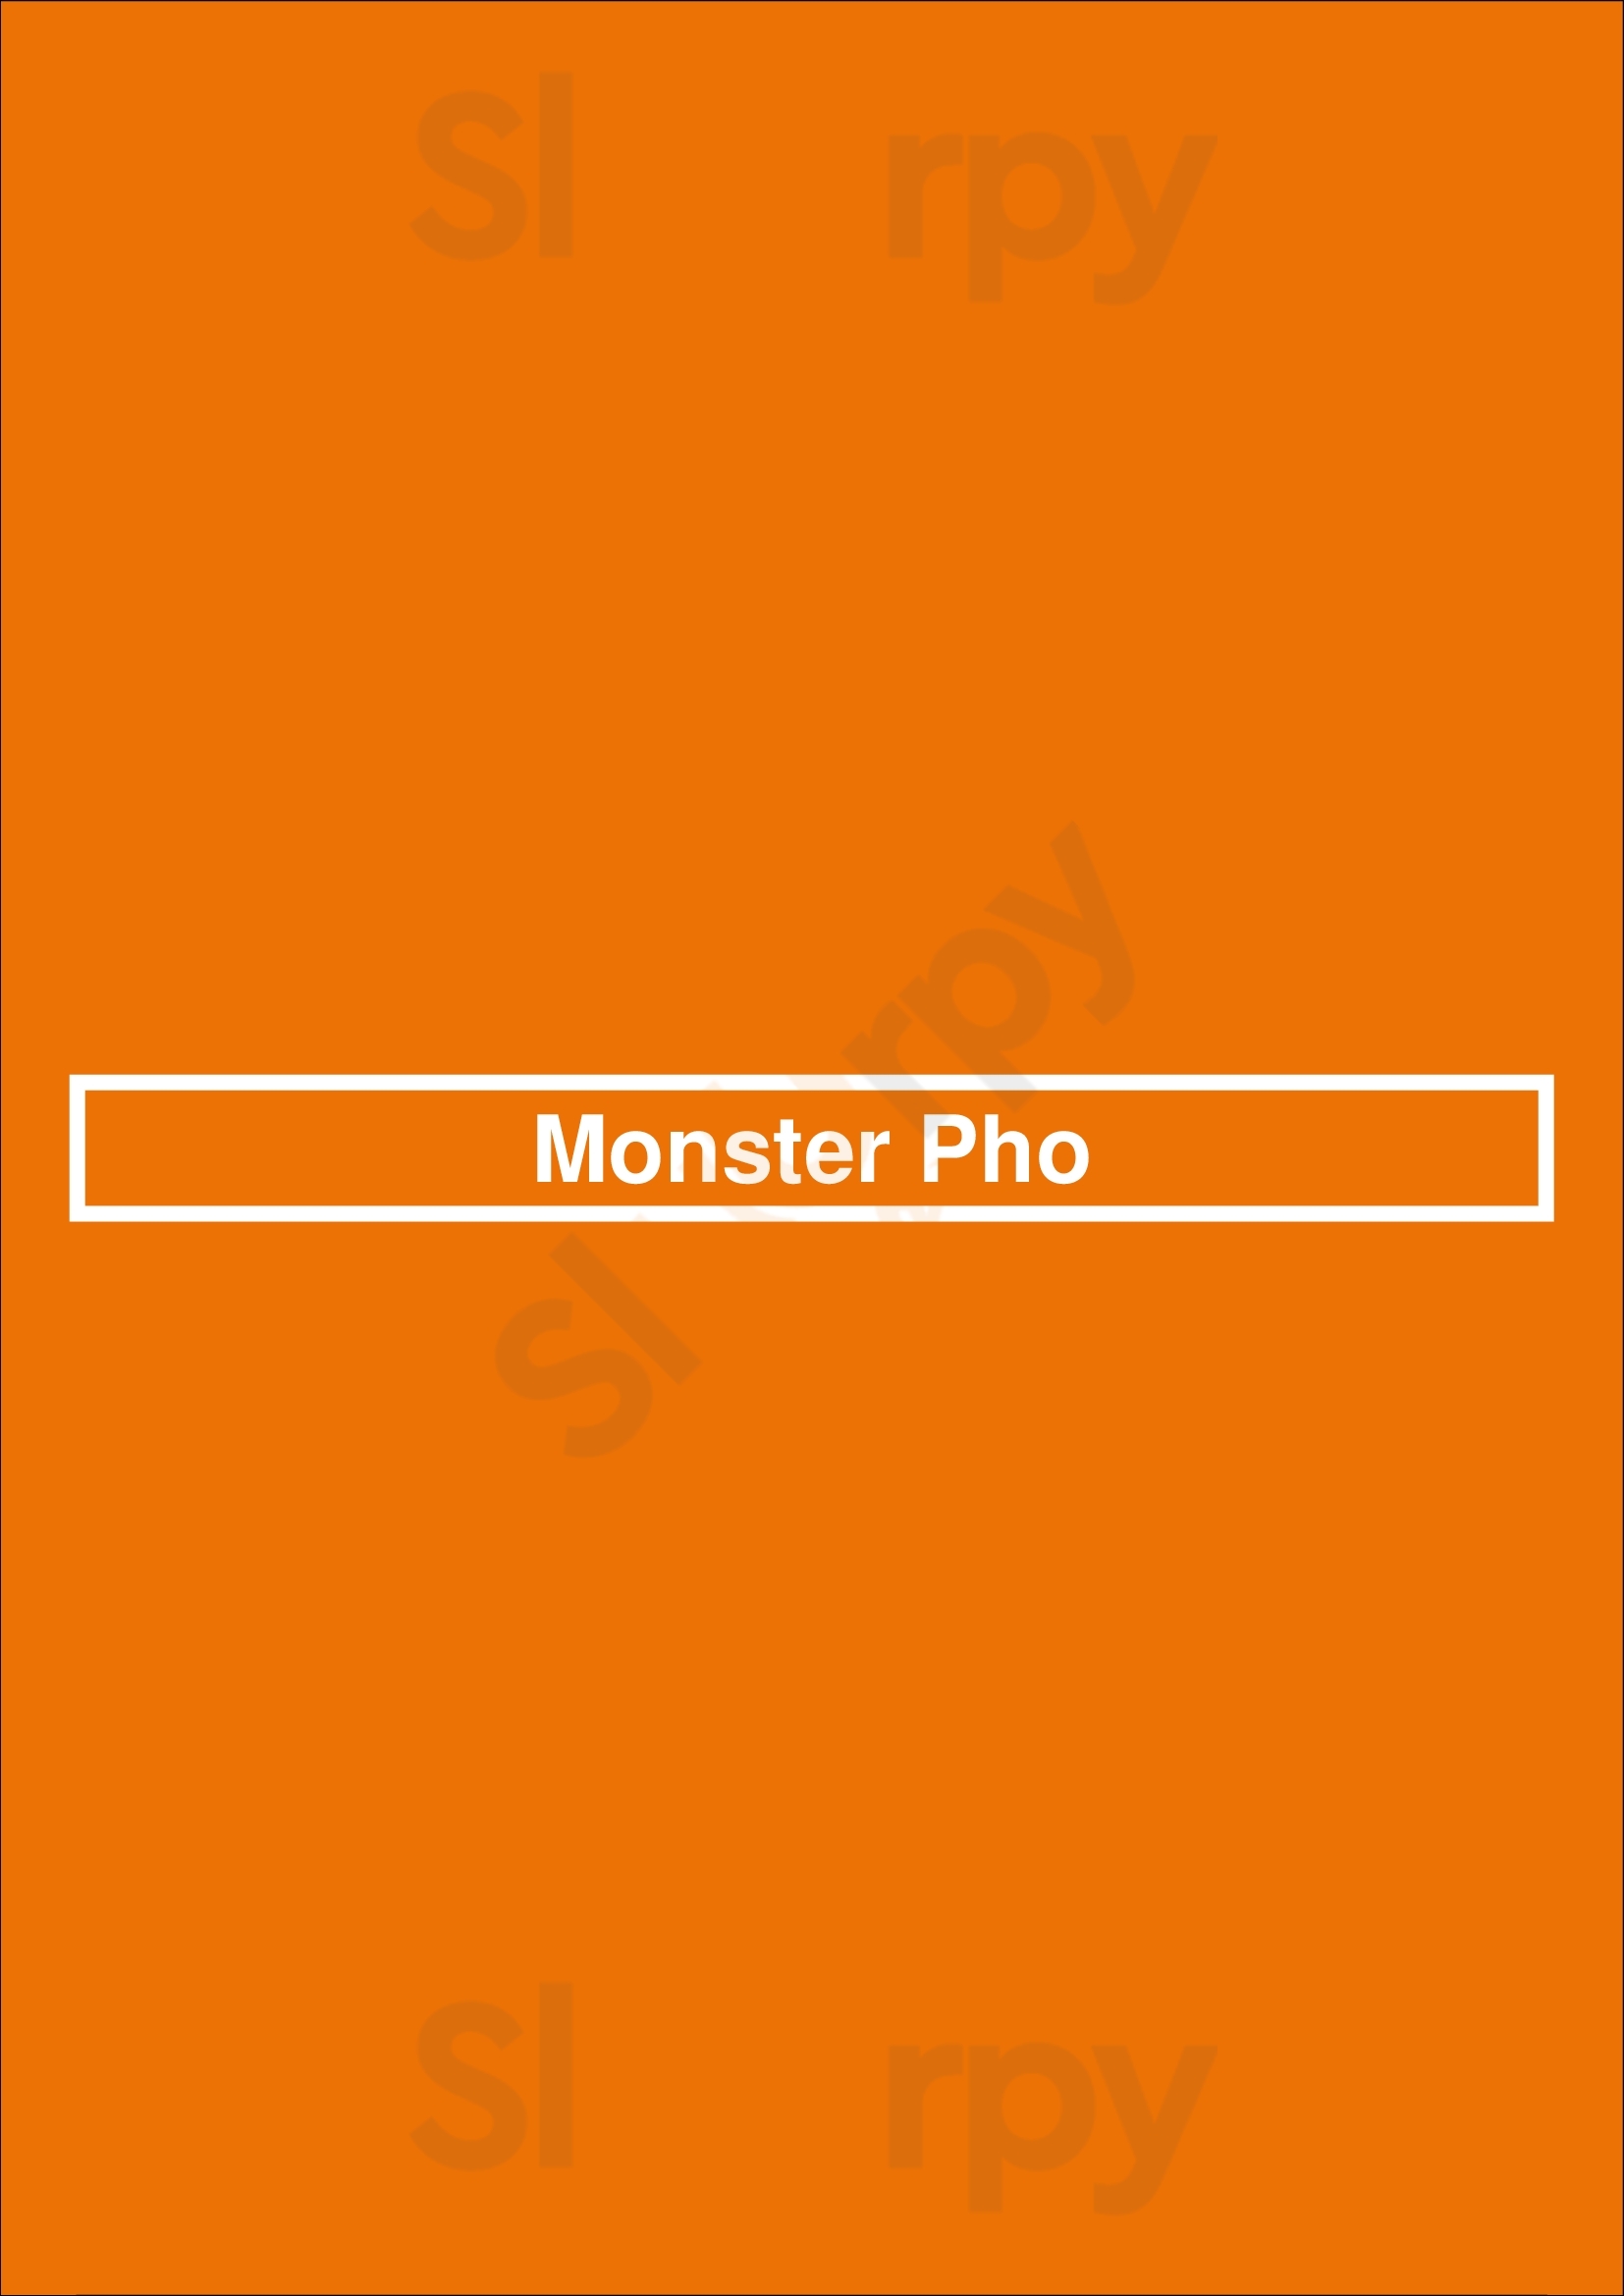 Monster Pho Oakland Menu - 1